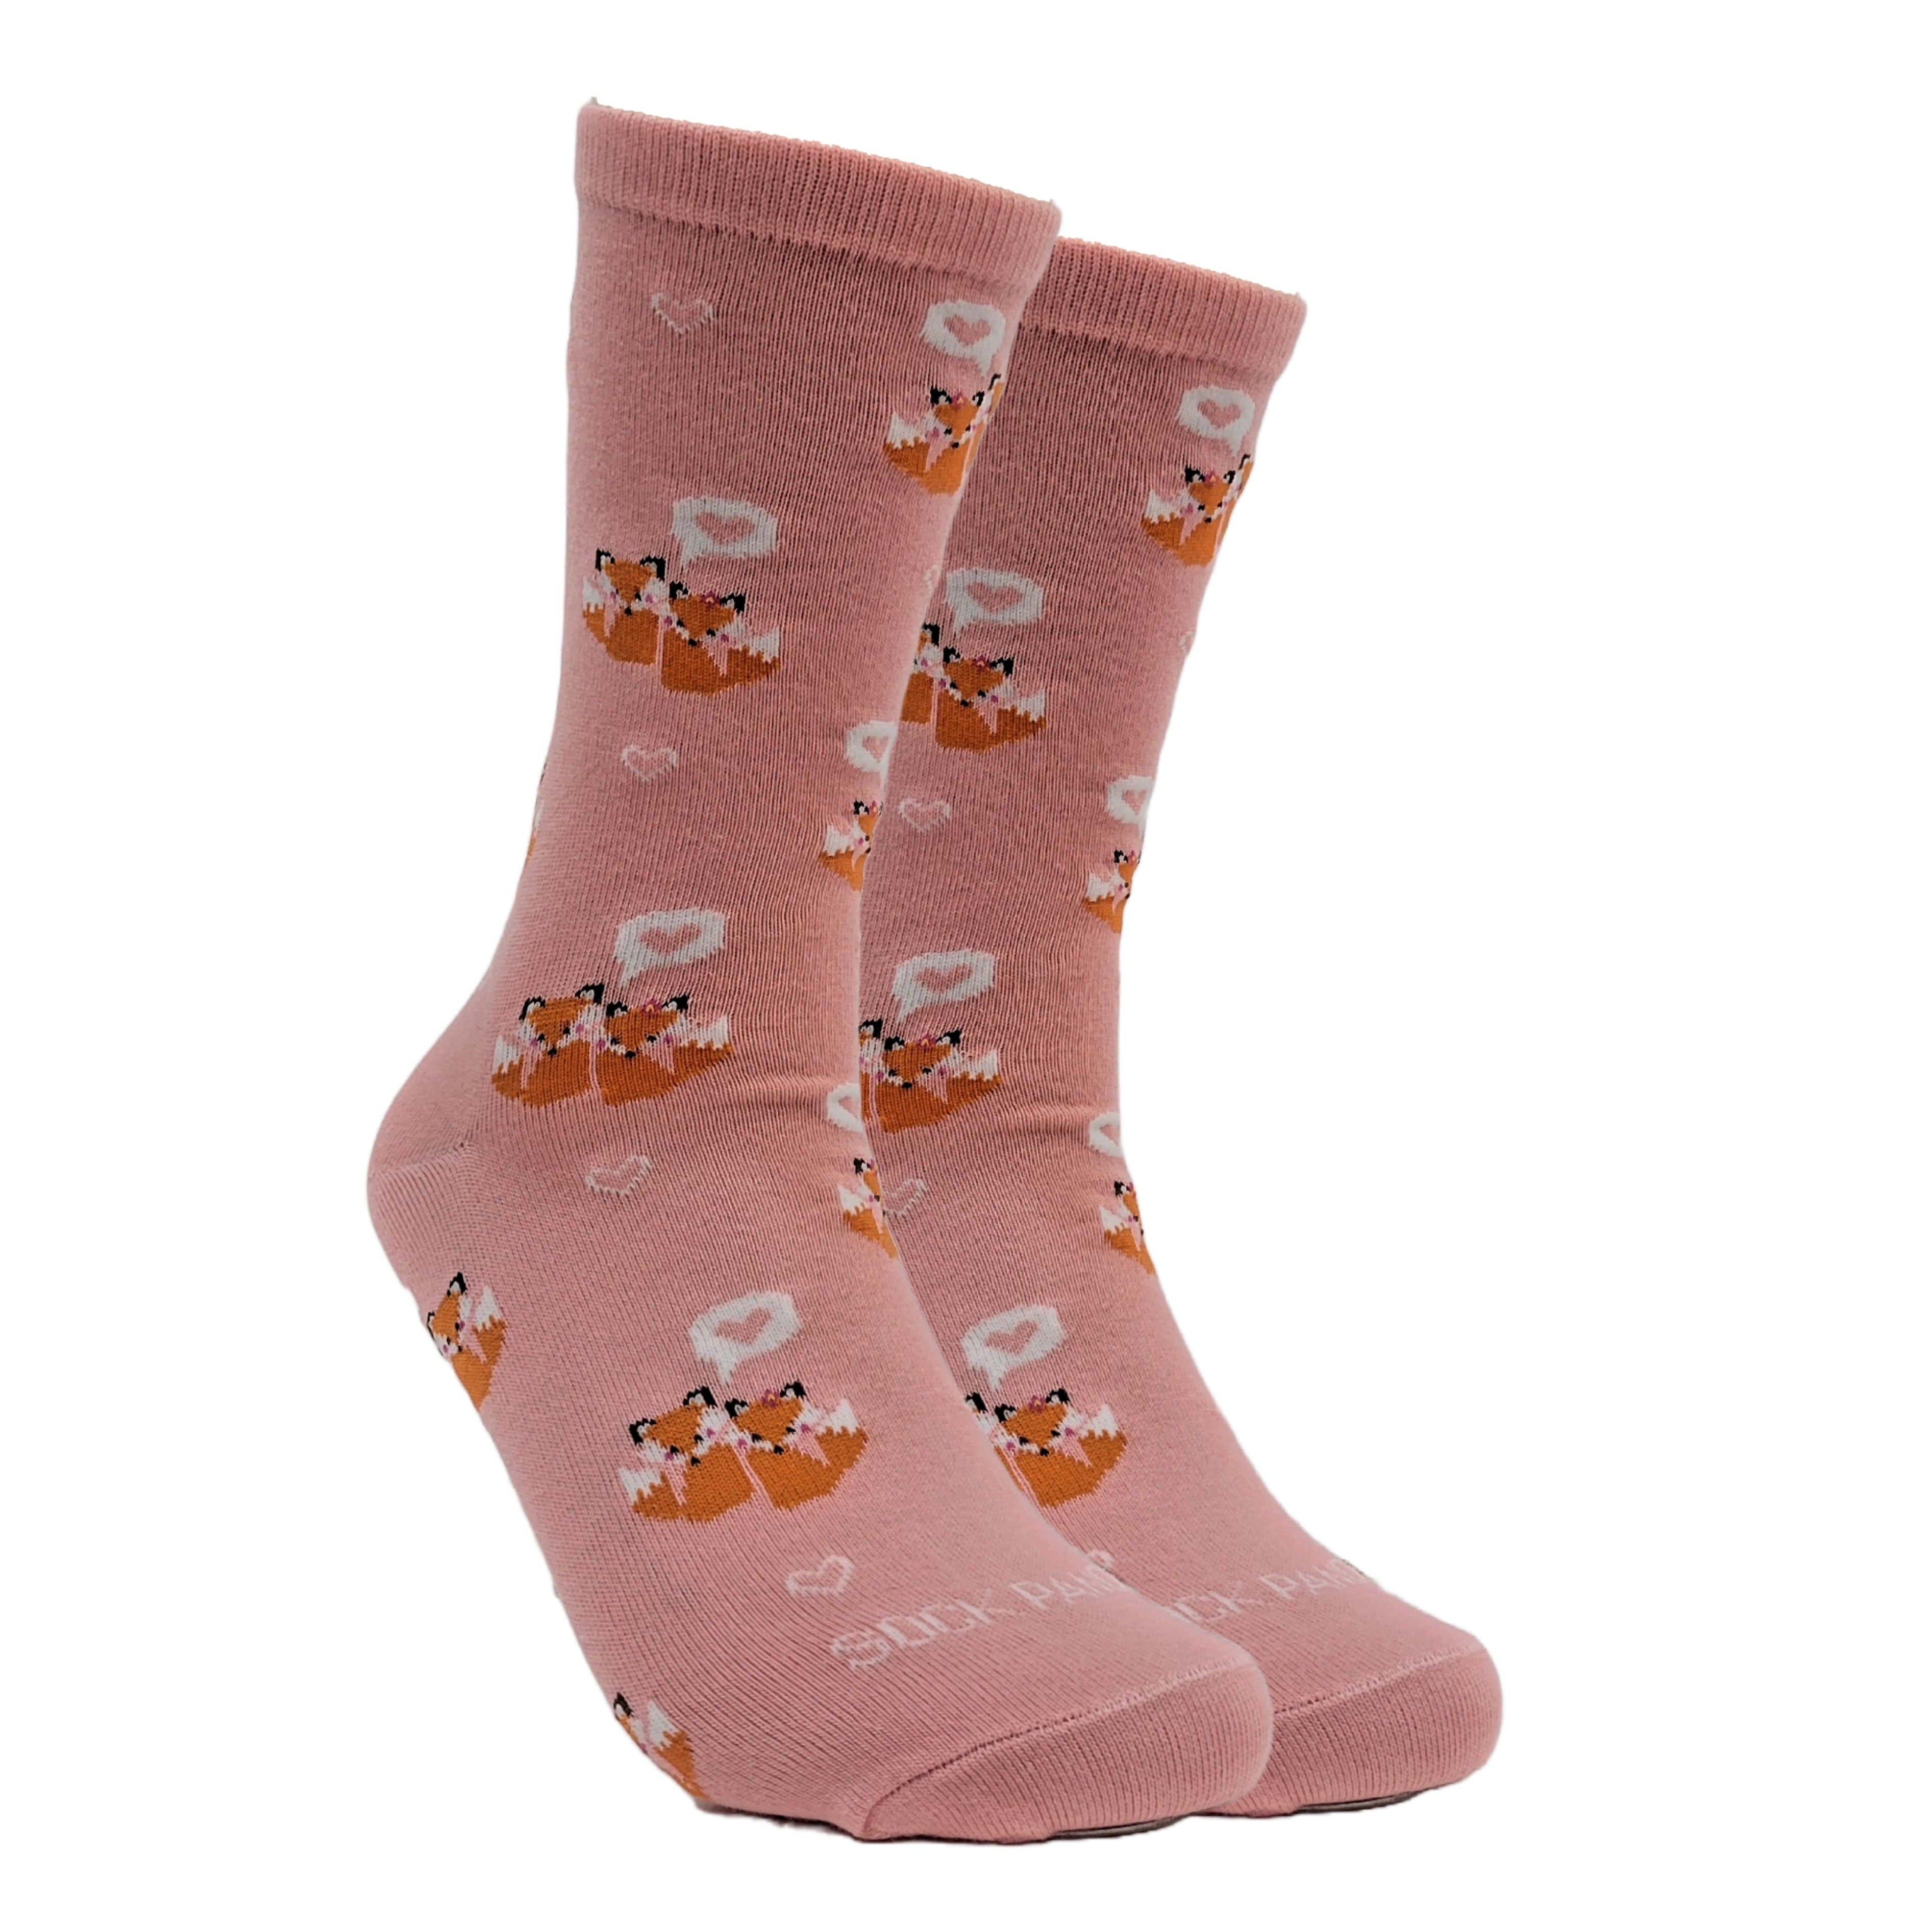 Love Foxes Socks from the Sock Panda (Adult Medium)